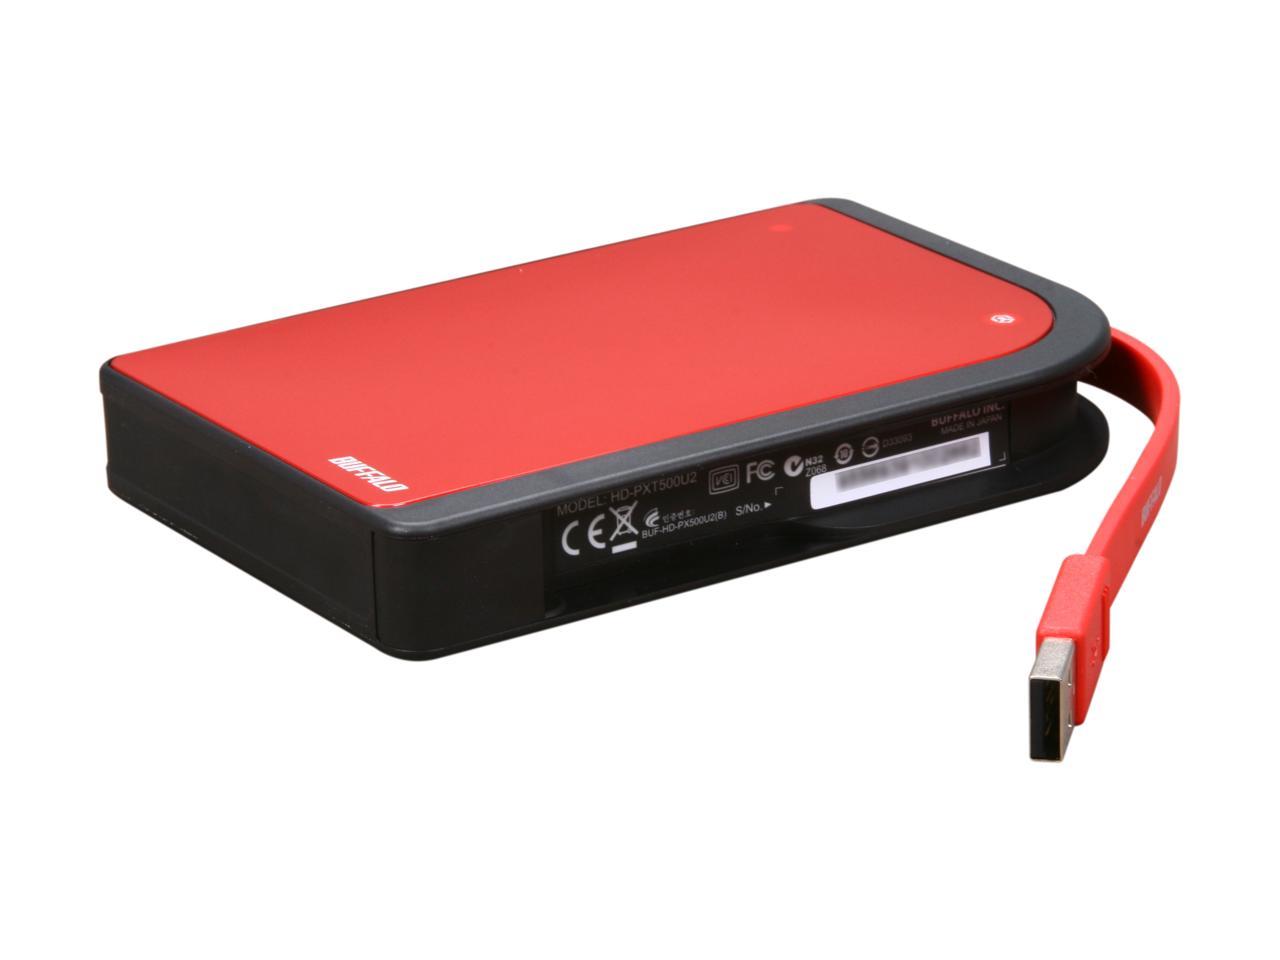 BUFFALO Metro 500GB USB 2.0 2.5" Portable Hard Drive Ruby Red - Newegg.com